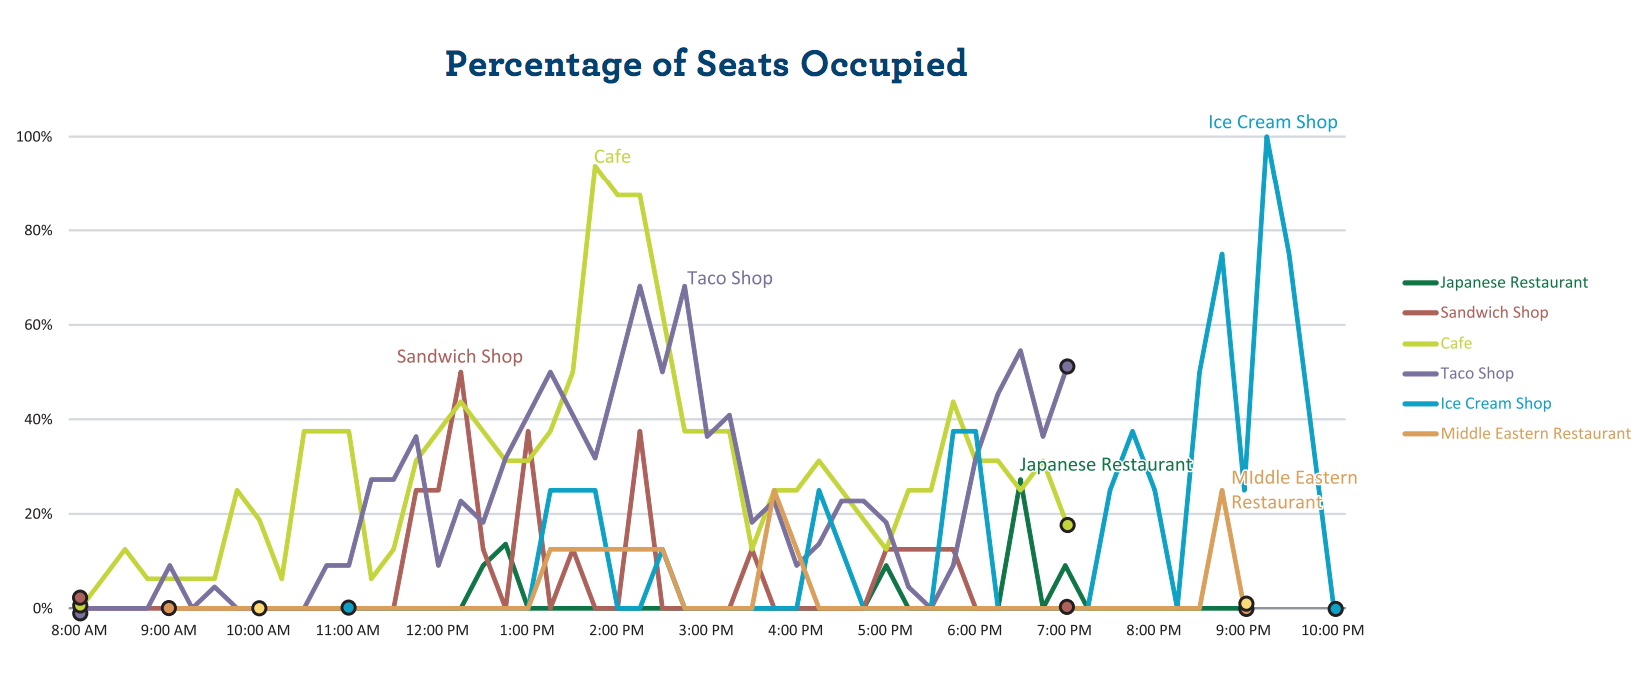 Percentage of Seats Occupied